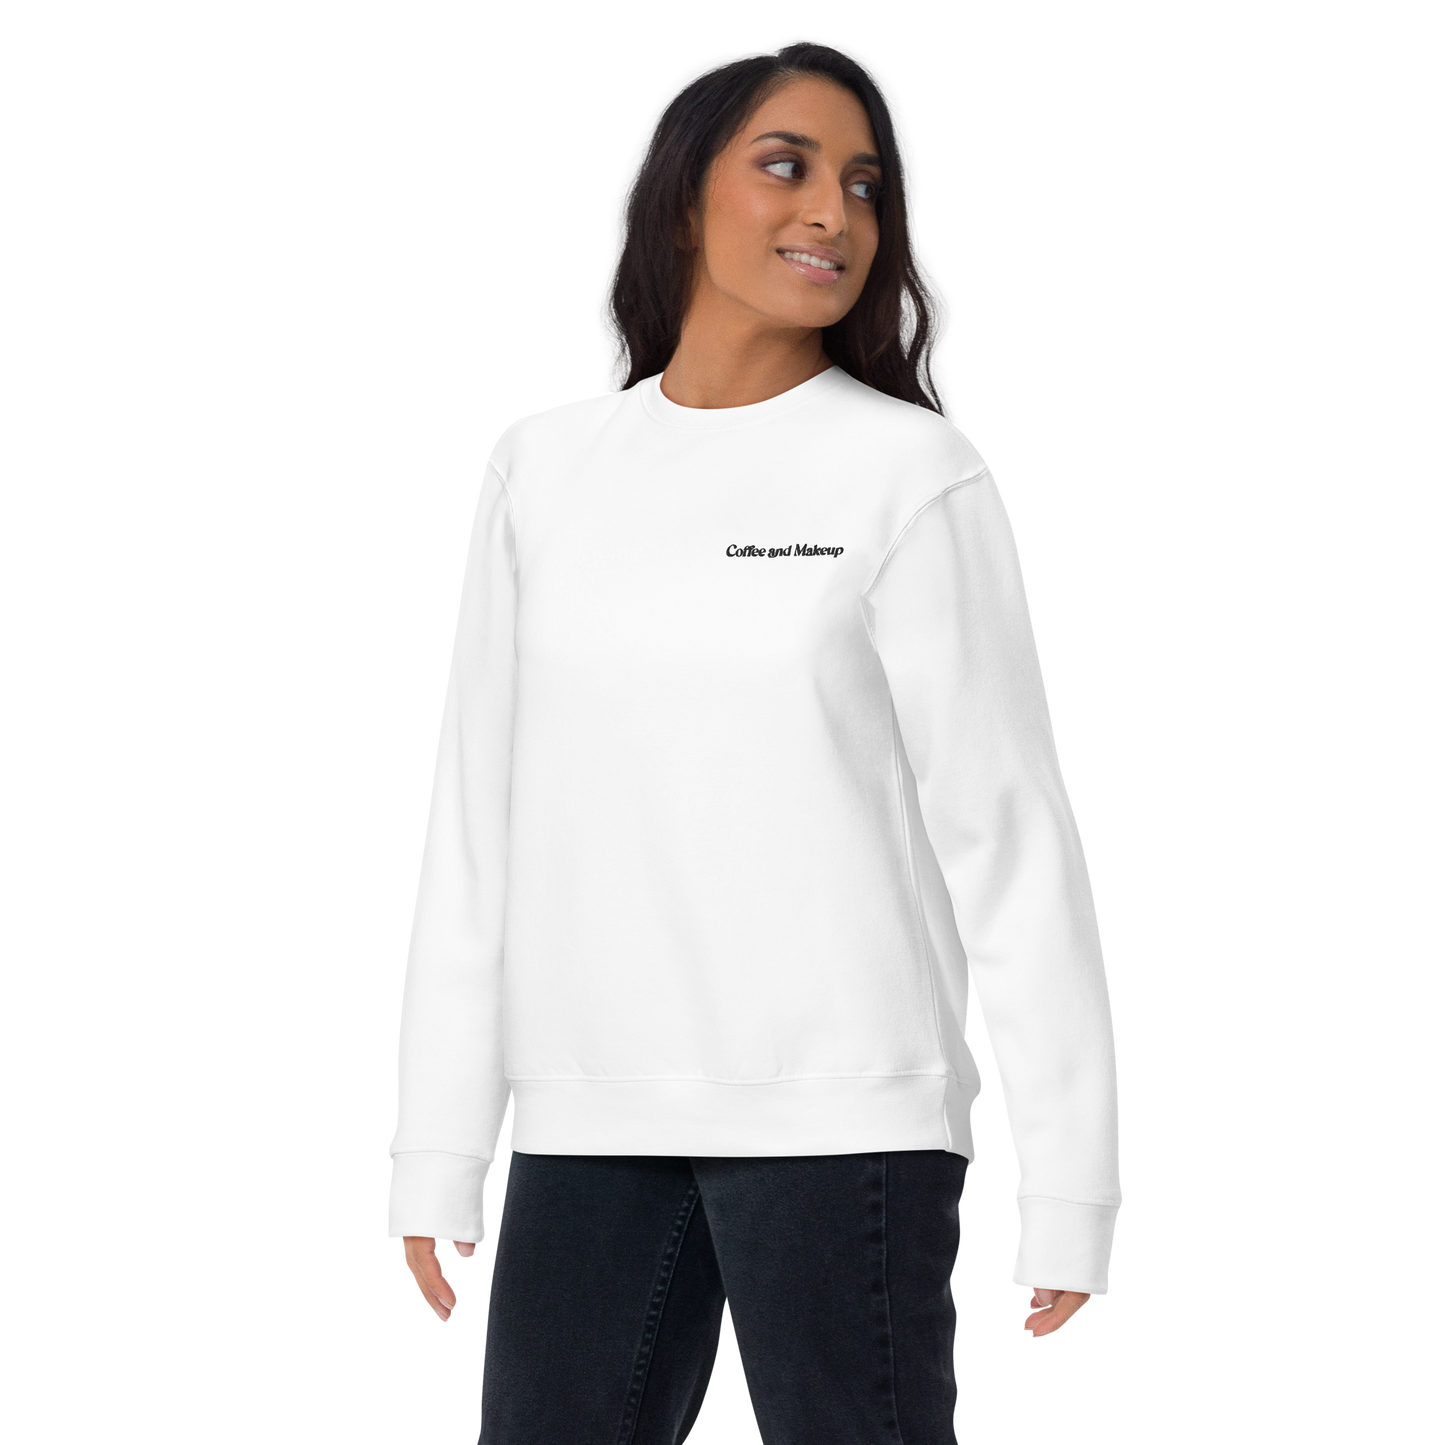 Unisex Premium Sweatshirt - SAHI COSMETICS